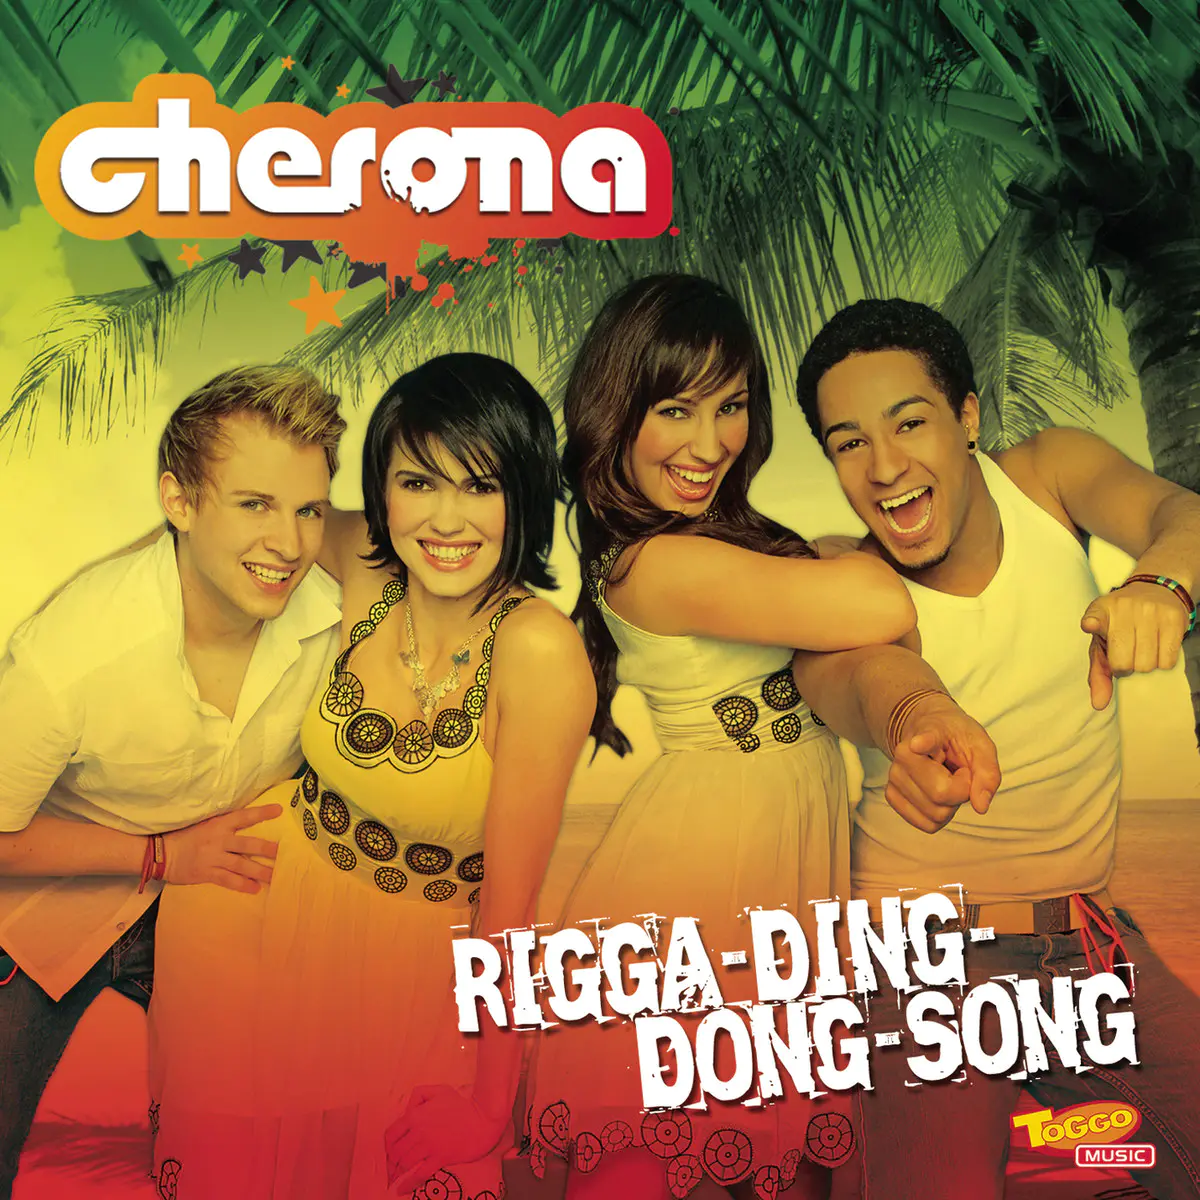 Rigga Ding Dong Song Songs Download Rigga Ding Dong Song Mp3 Songs Online Free On Gaana Com